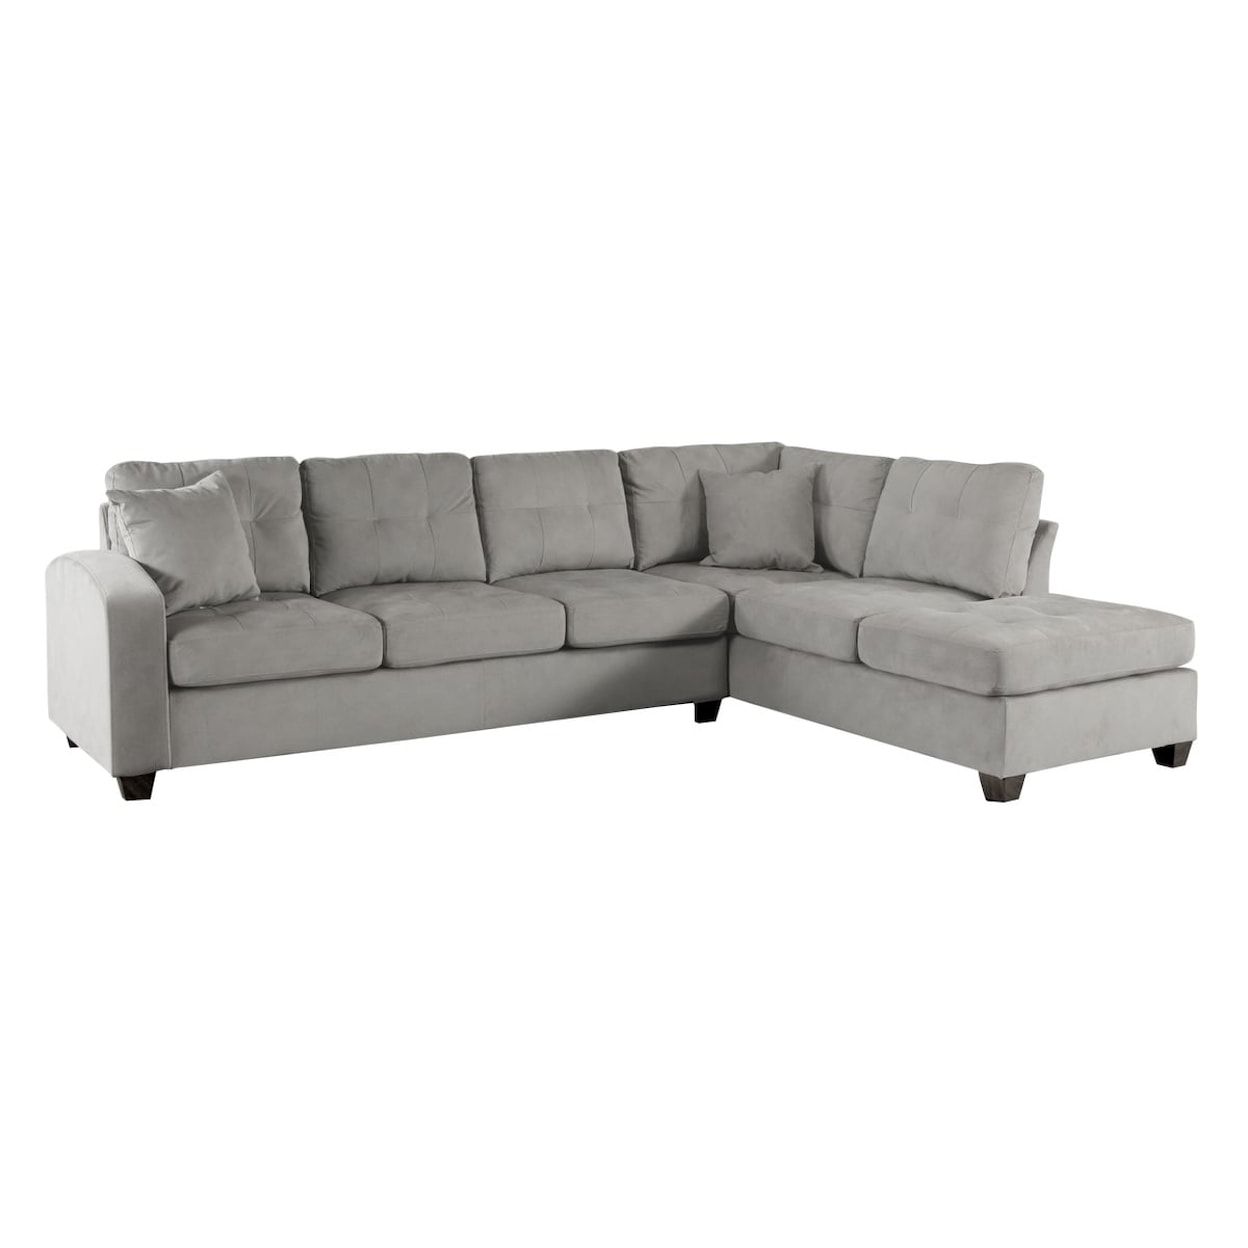 Homelegance Emilio 2-Piece Reversible Sectional Sofa